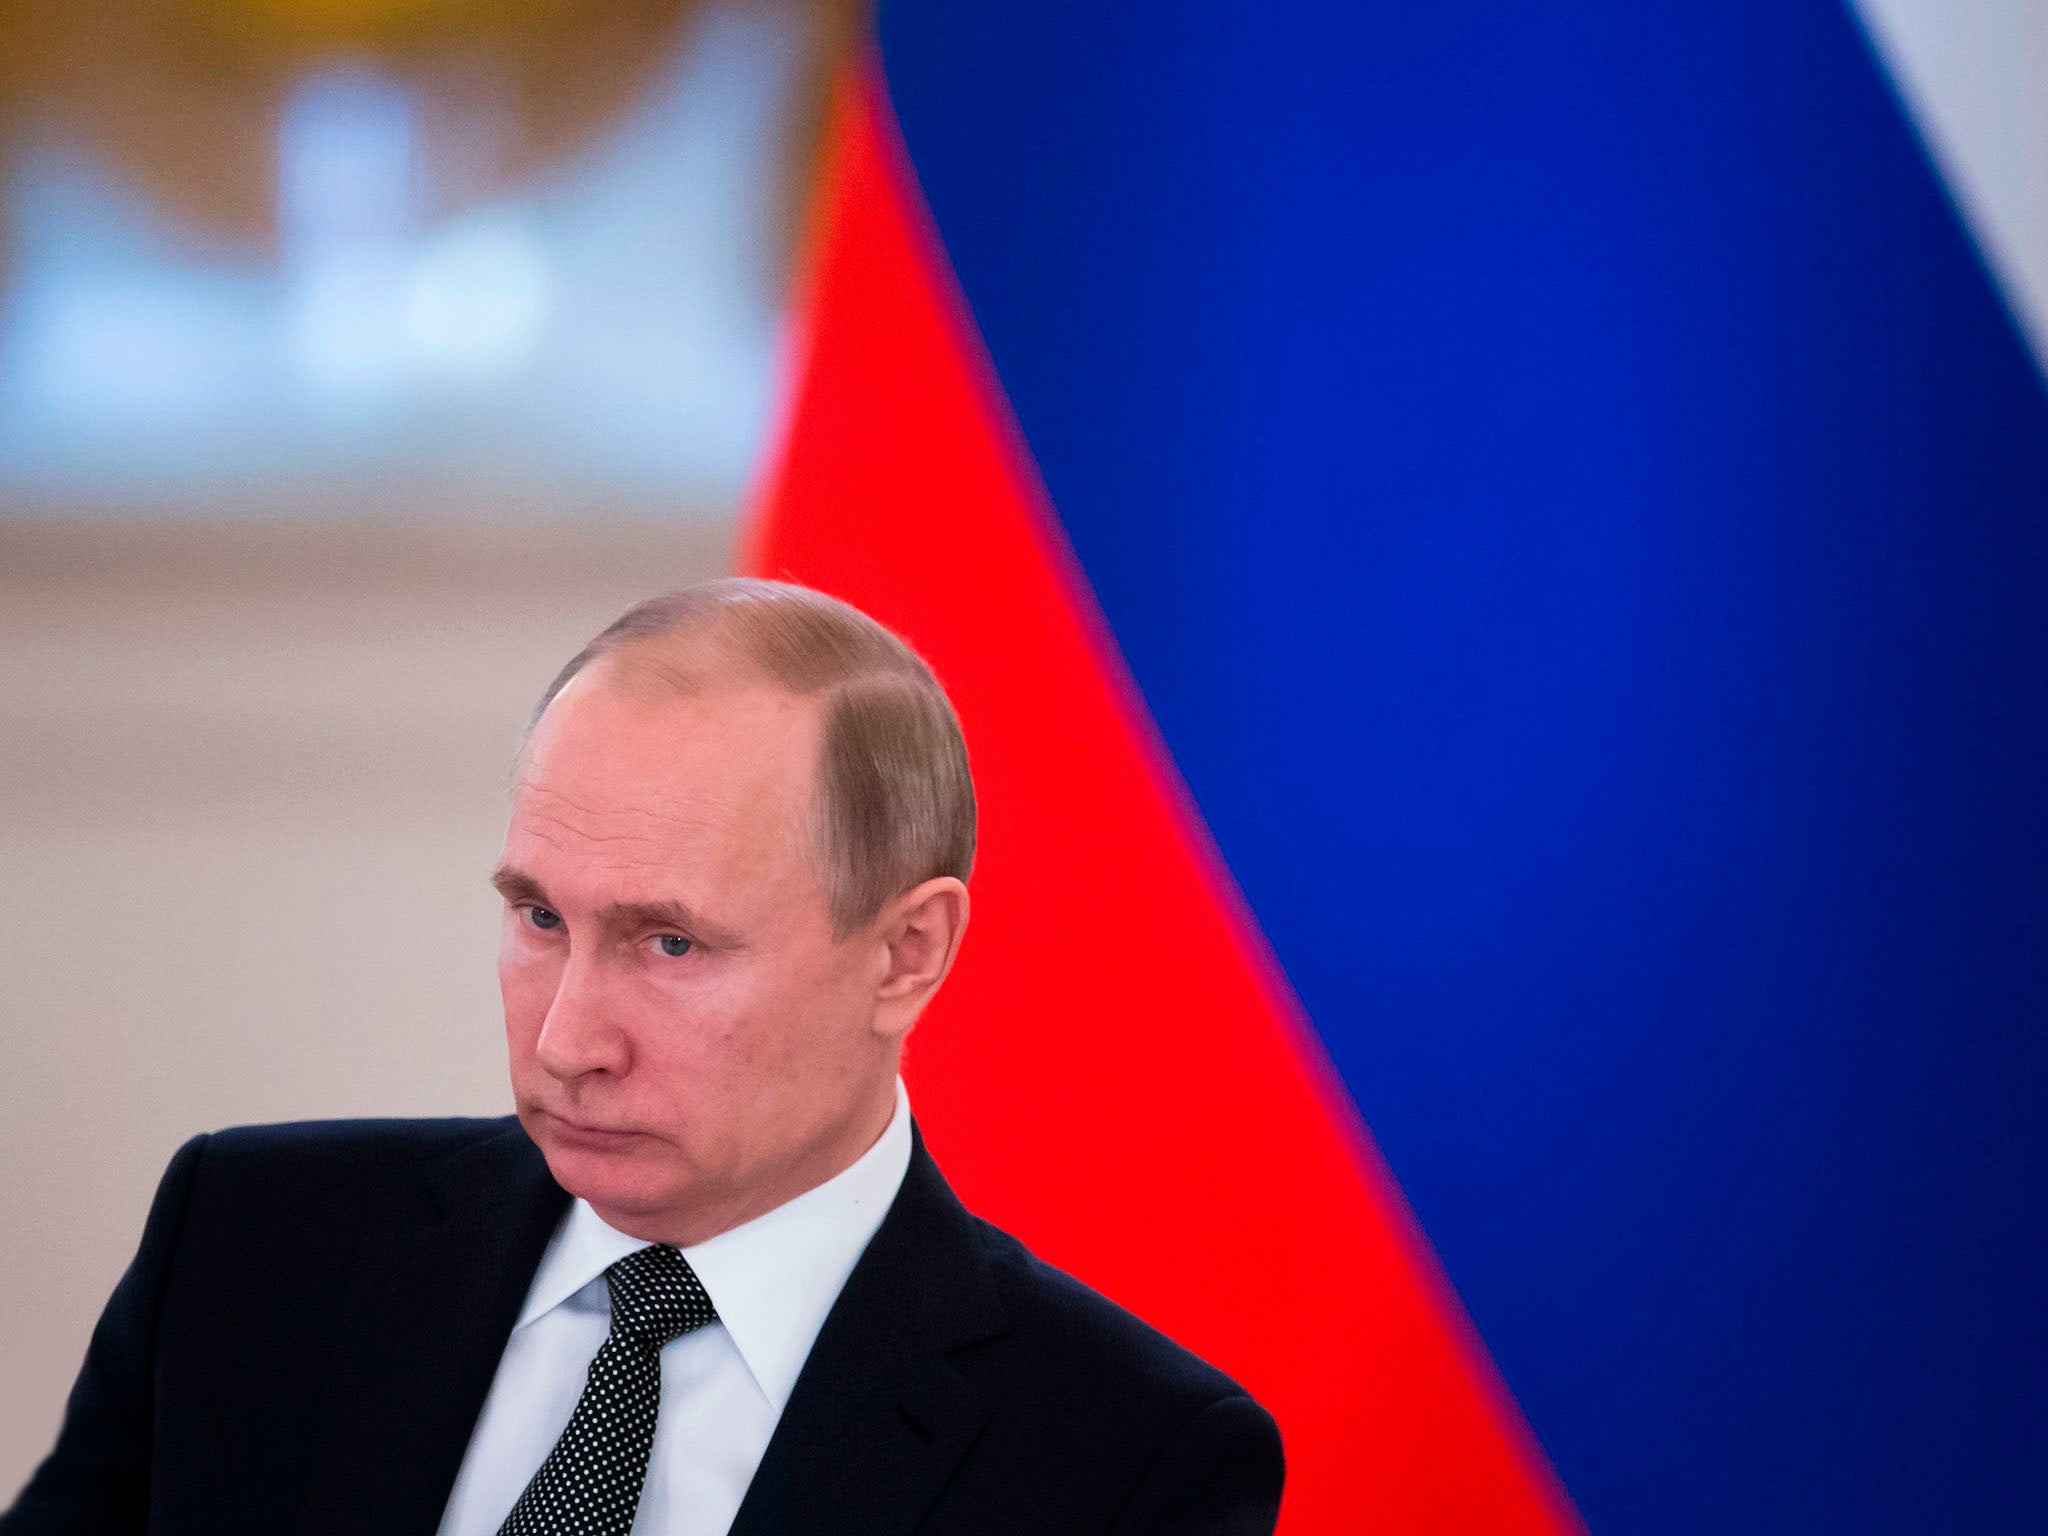 Russian President Vladimir Putin looks on